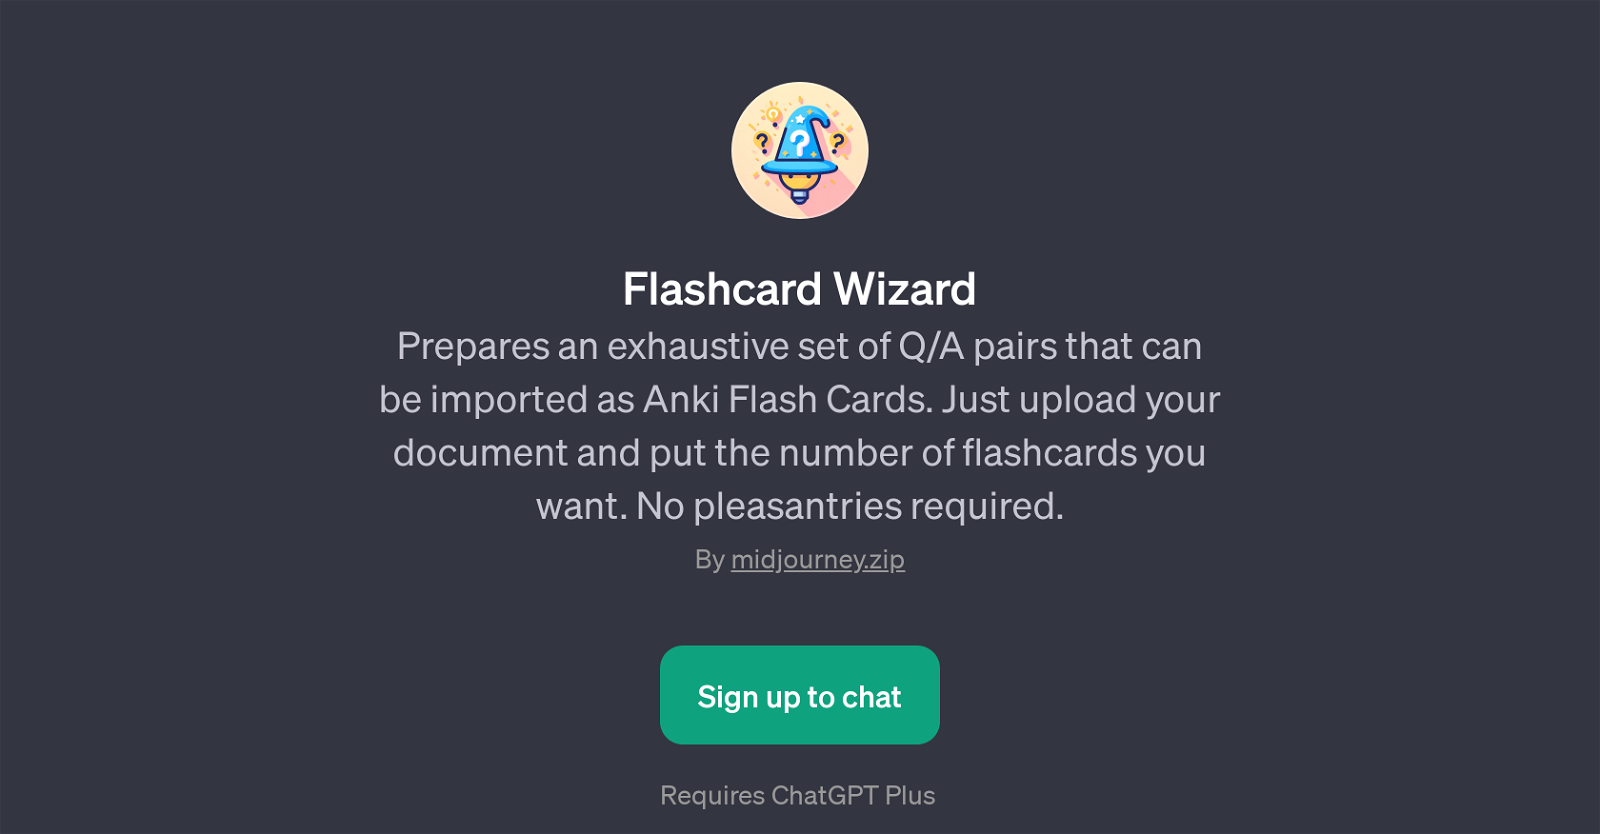 Flashcard Wizard website